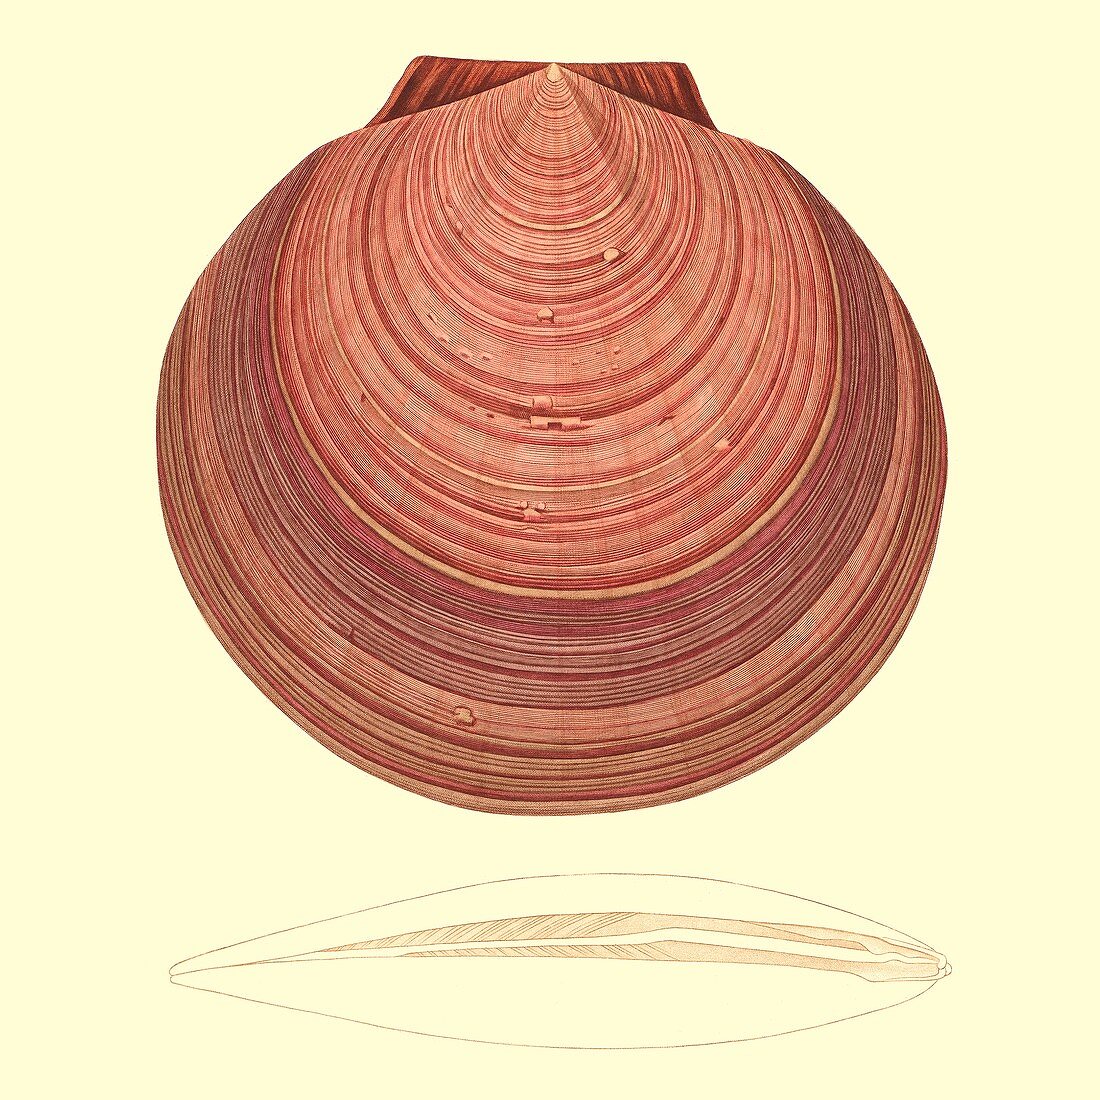 Saucer scallop shell